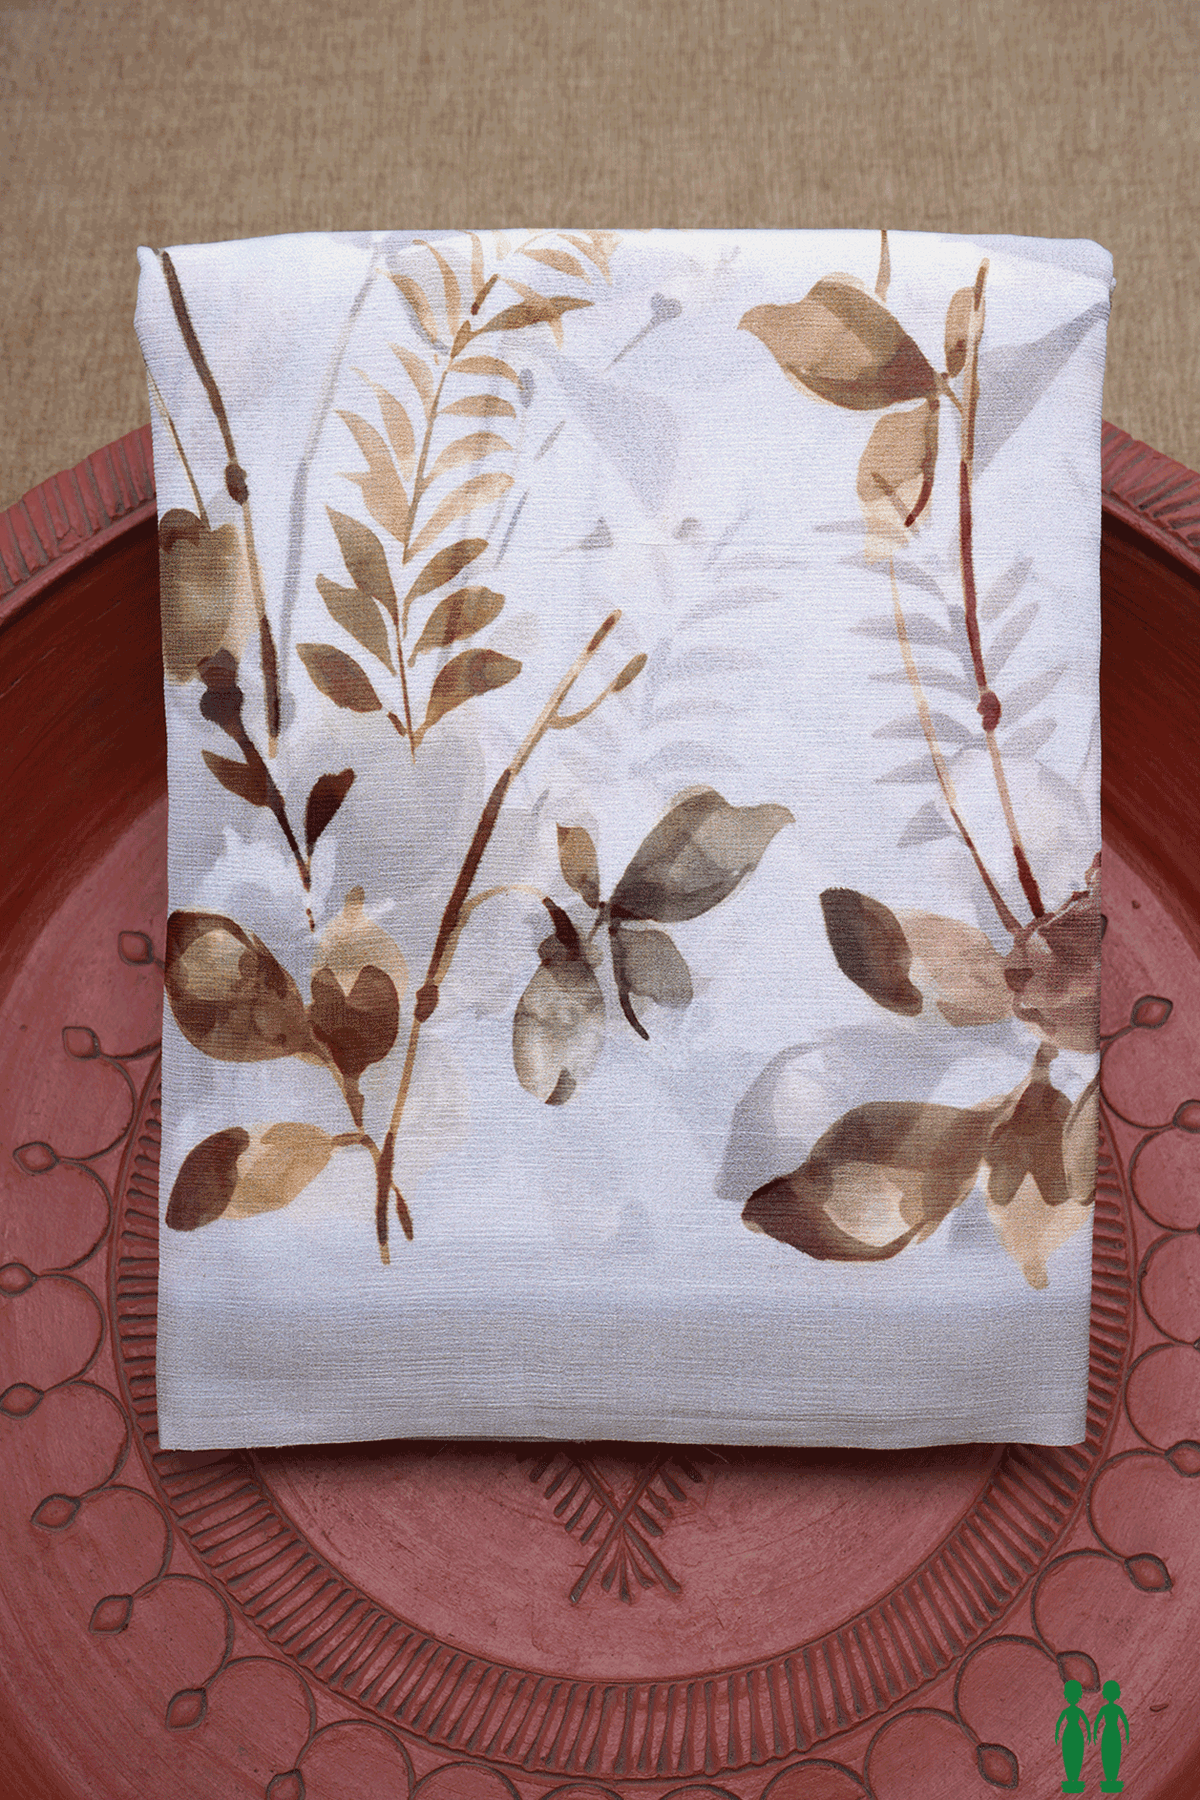 Floral Digital Printed Off White Chiffon Saree